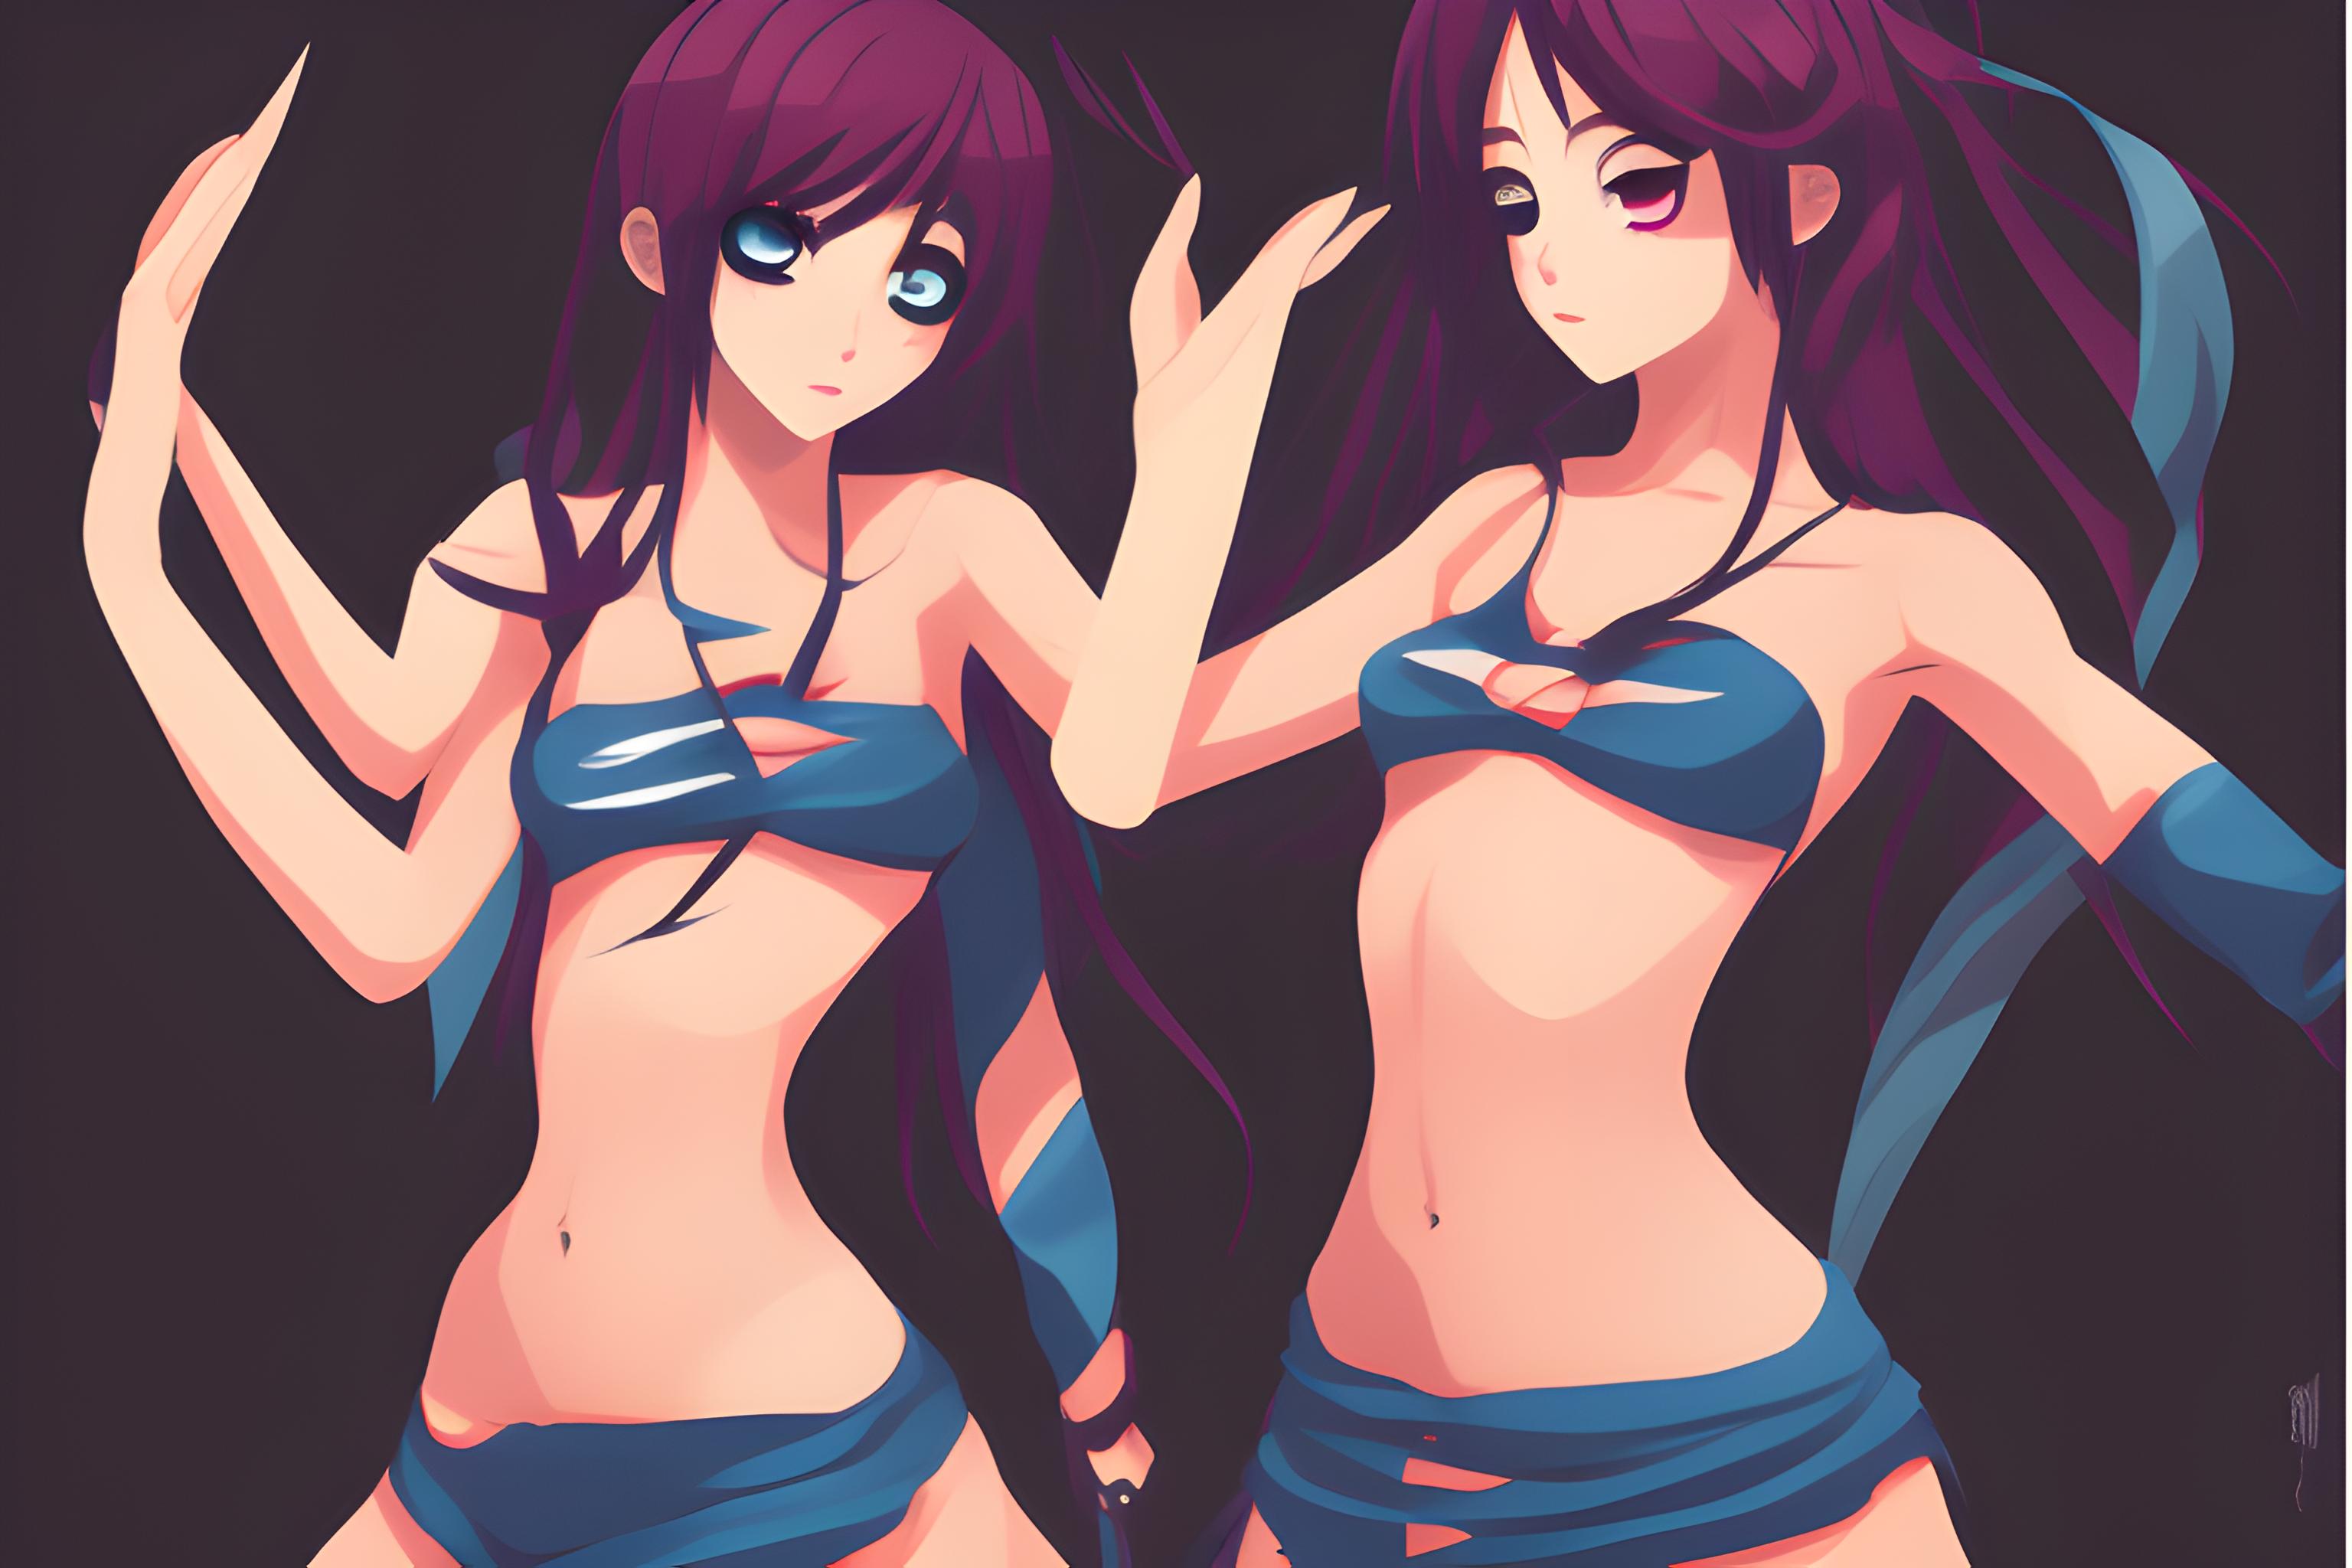 Beautiful anime girls fighting in very very minimal clothing